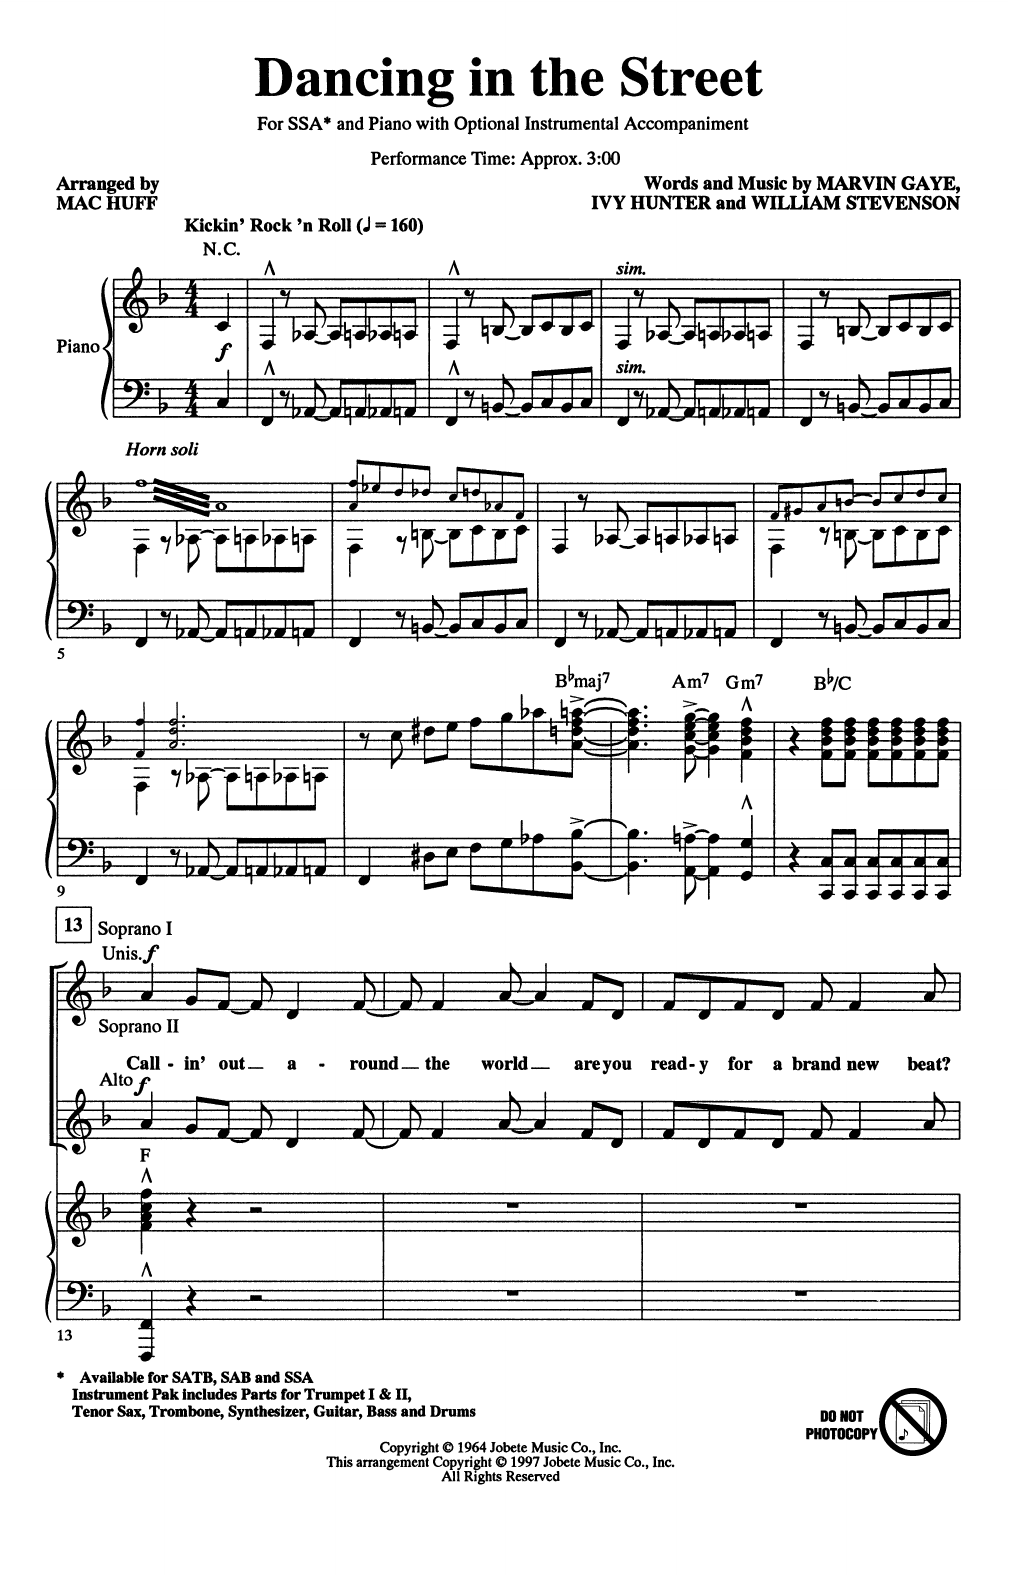 Martha & The Vandellas Dancing In The Street (arr. Mac Huff) Sheet Music Notes & Chords for SAB Choir - Download or Print PDF